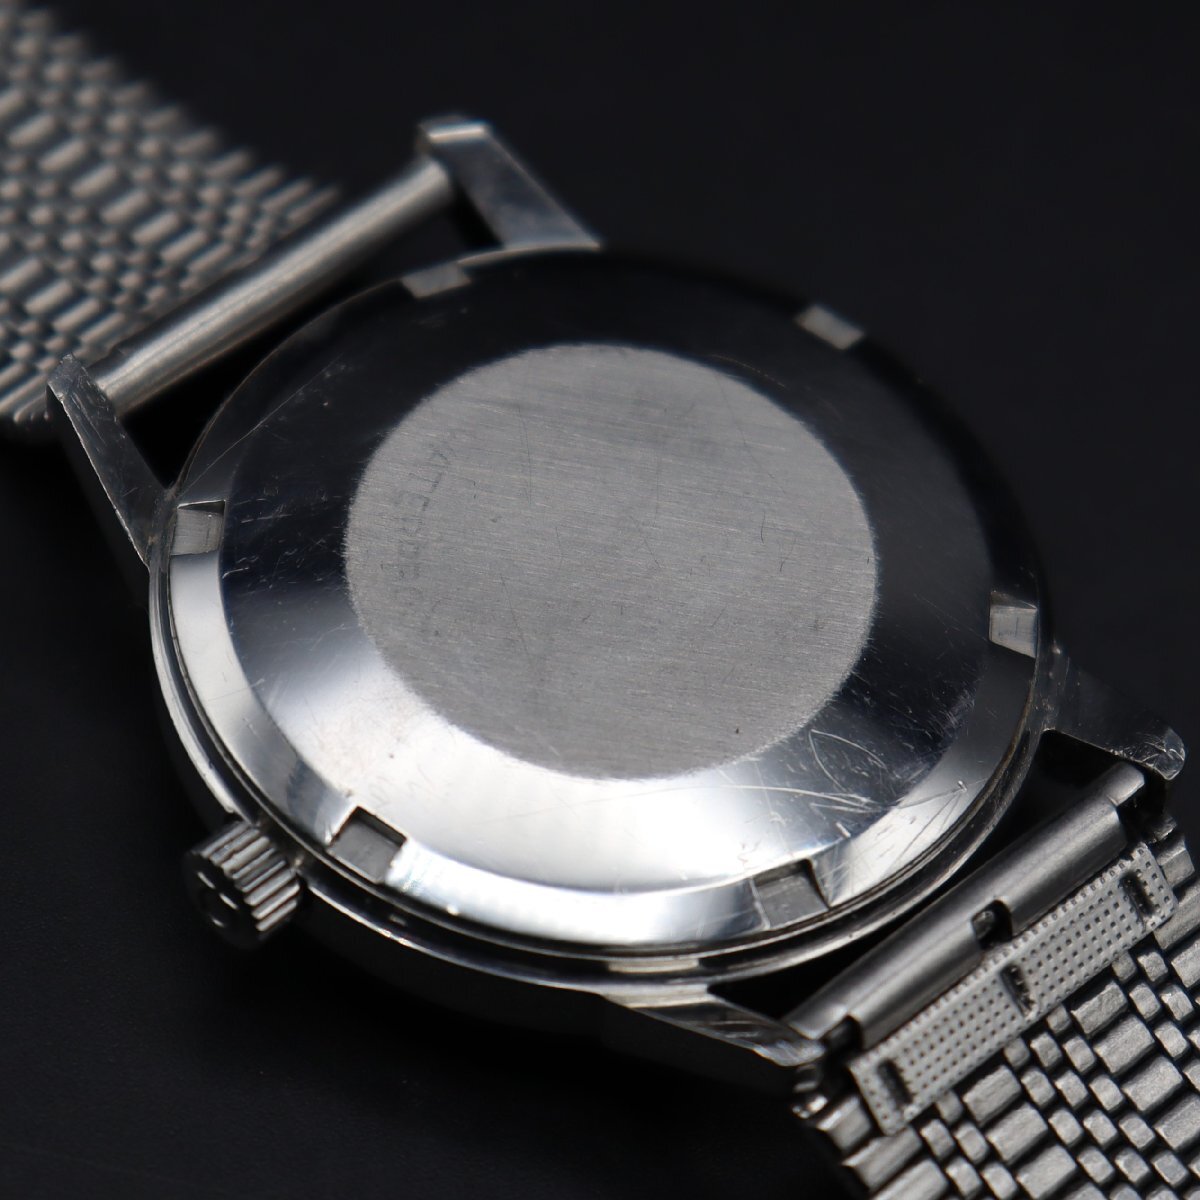 OMEGA GENEVE オメガ ジュネーブ Ref.166.037 Cal.565 自動巻き 1970年頃製造 デイト スイス製 アンティーク メンズ腕時計_画像7